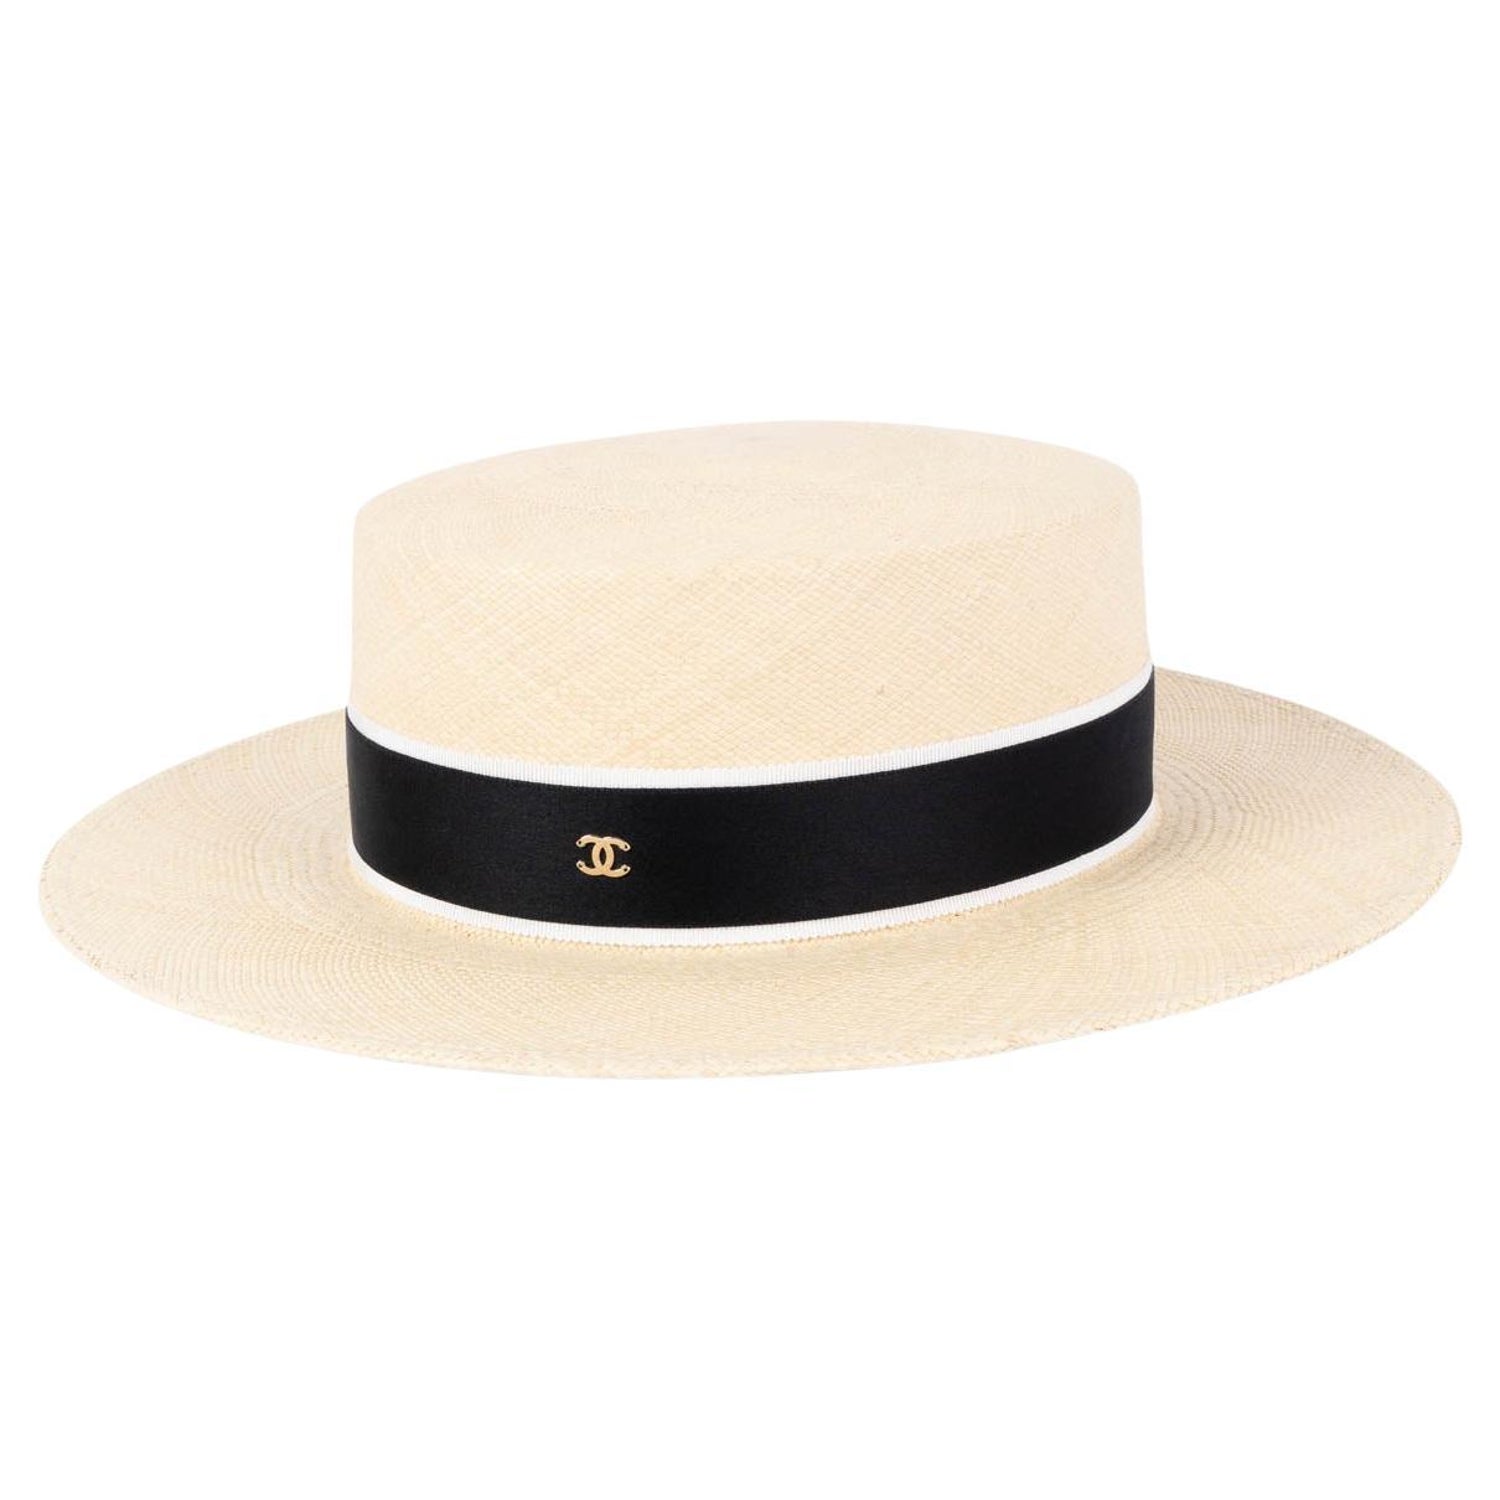 Chanel Boater Hat - For Sale on 1stDibs